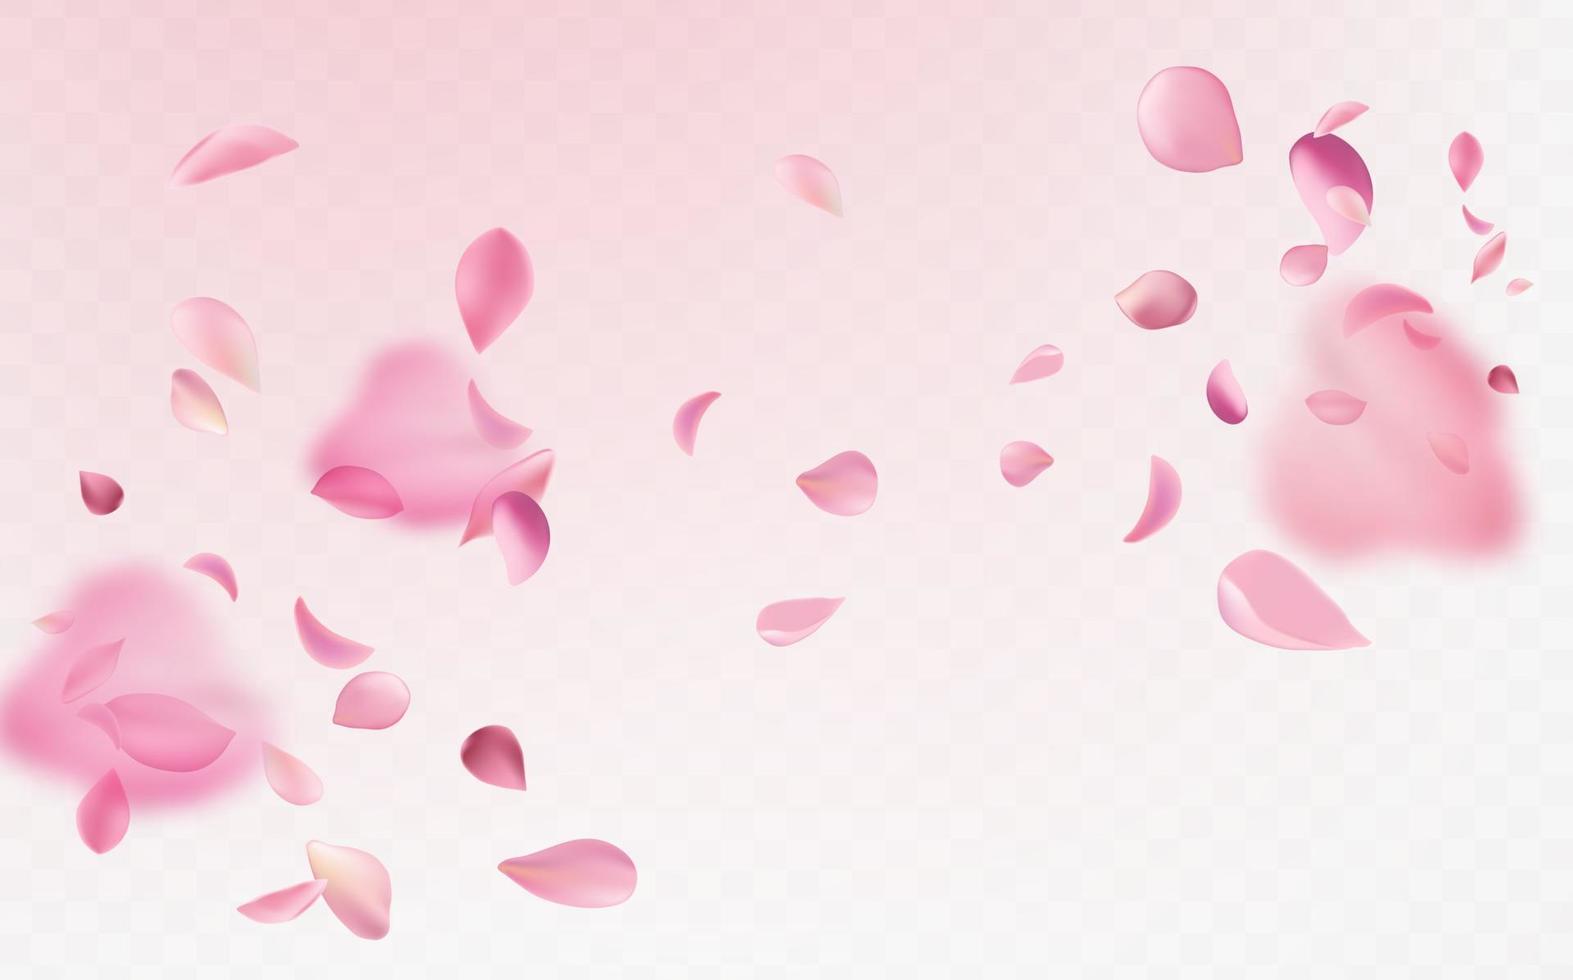 vôo frágil Rosa e branco sakura pétalas. símbolo do japonês cultura. vetor